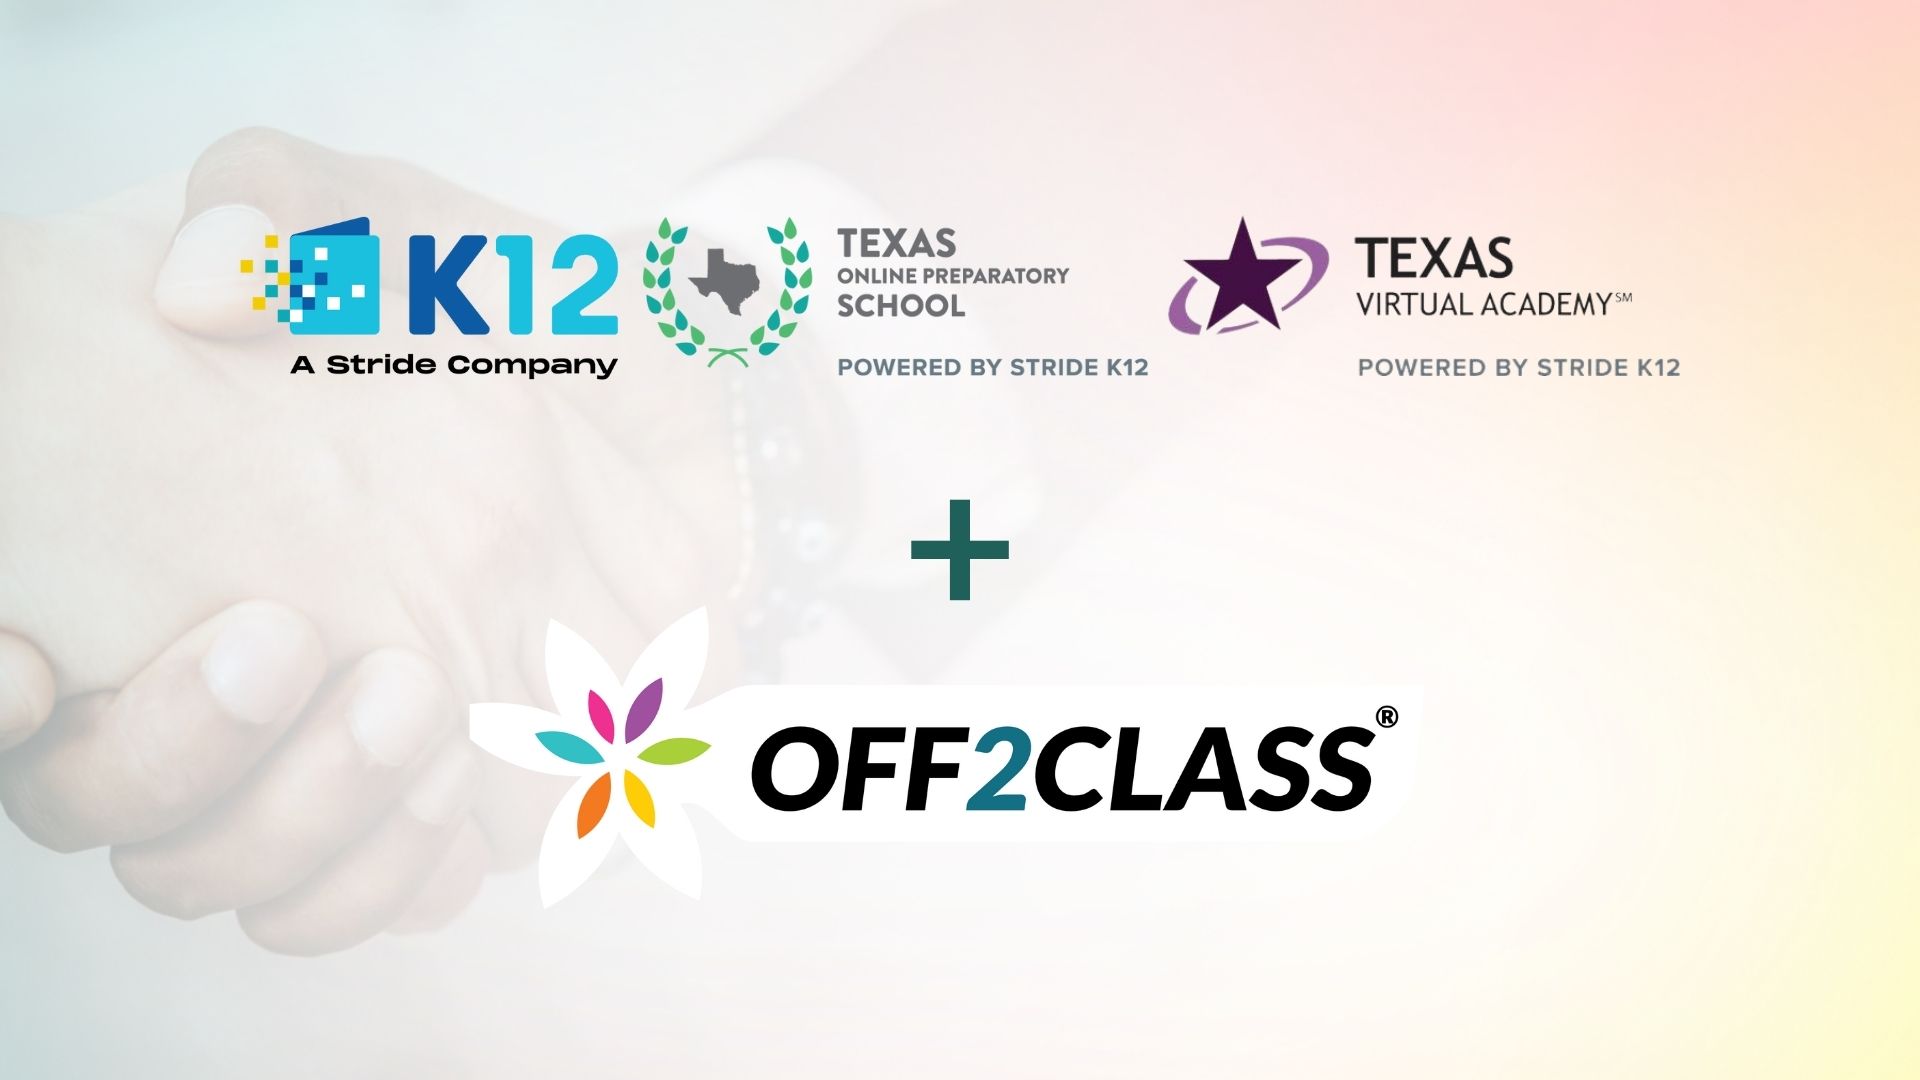 Stride K12 in Texas Online Public Schools Off2Class